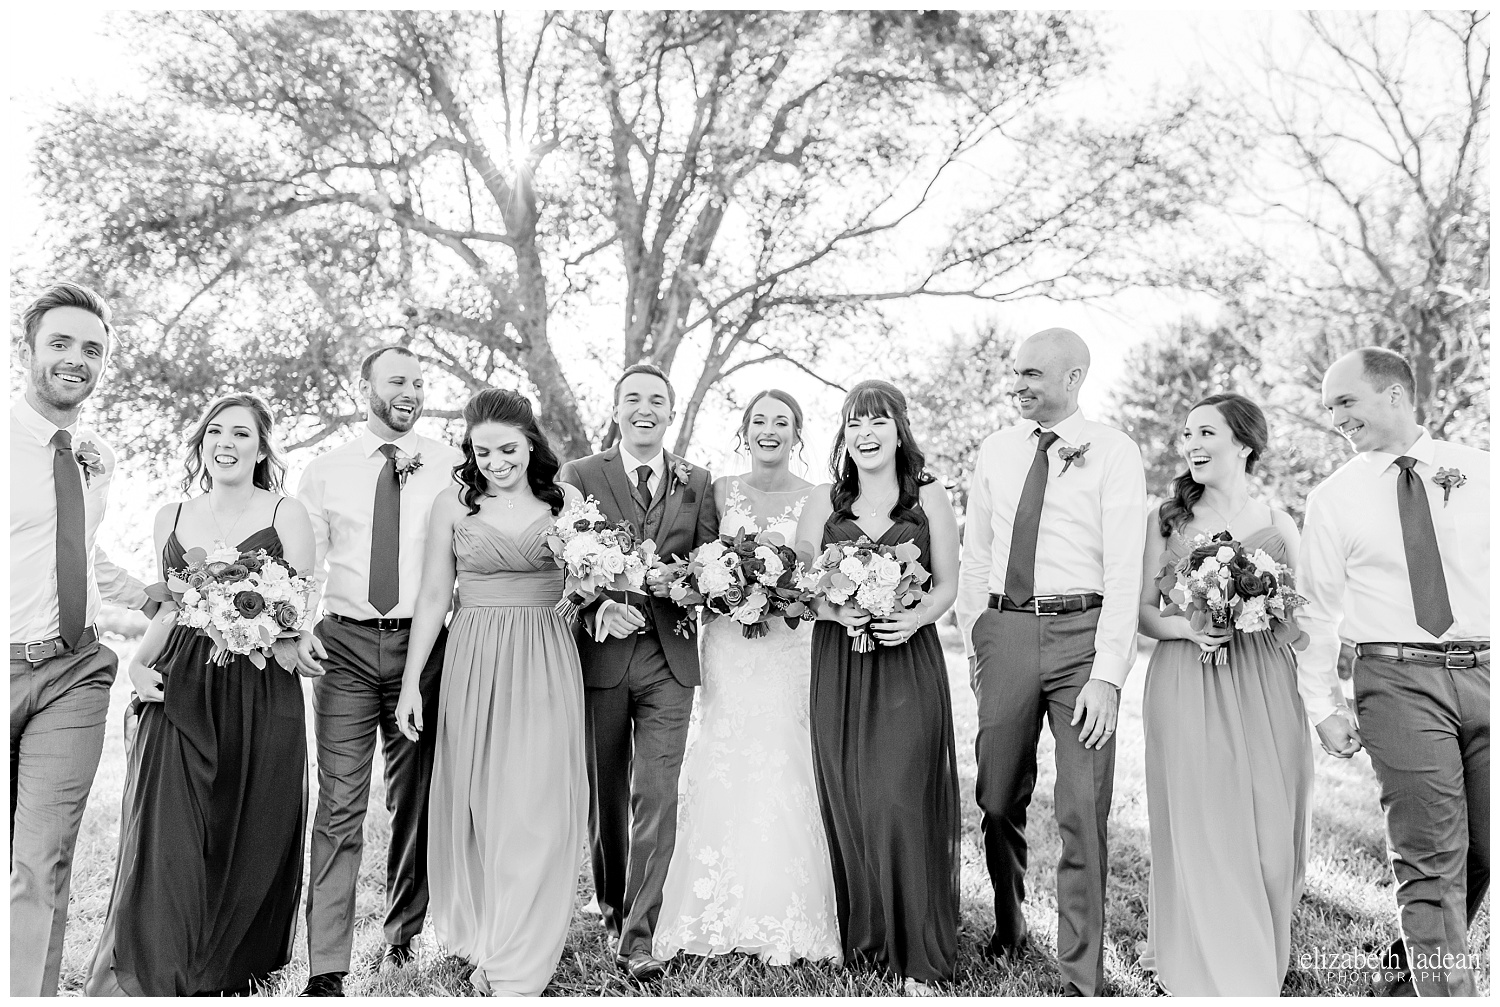 Kansas-City-KC-Wedding-Photographer-2017BestOf-Elizabeth-Ladean-Photography-photo-_6050.jpg